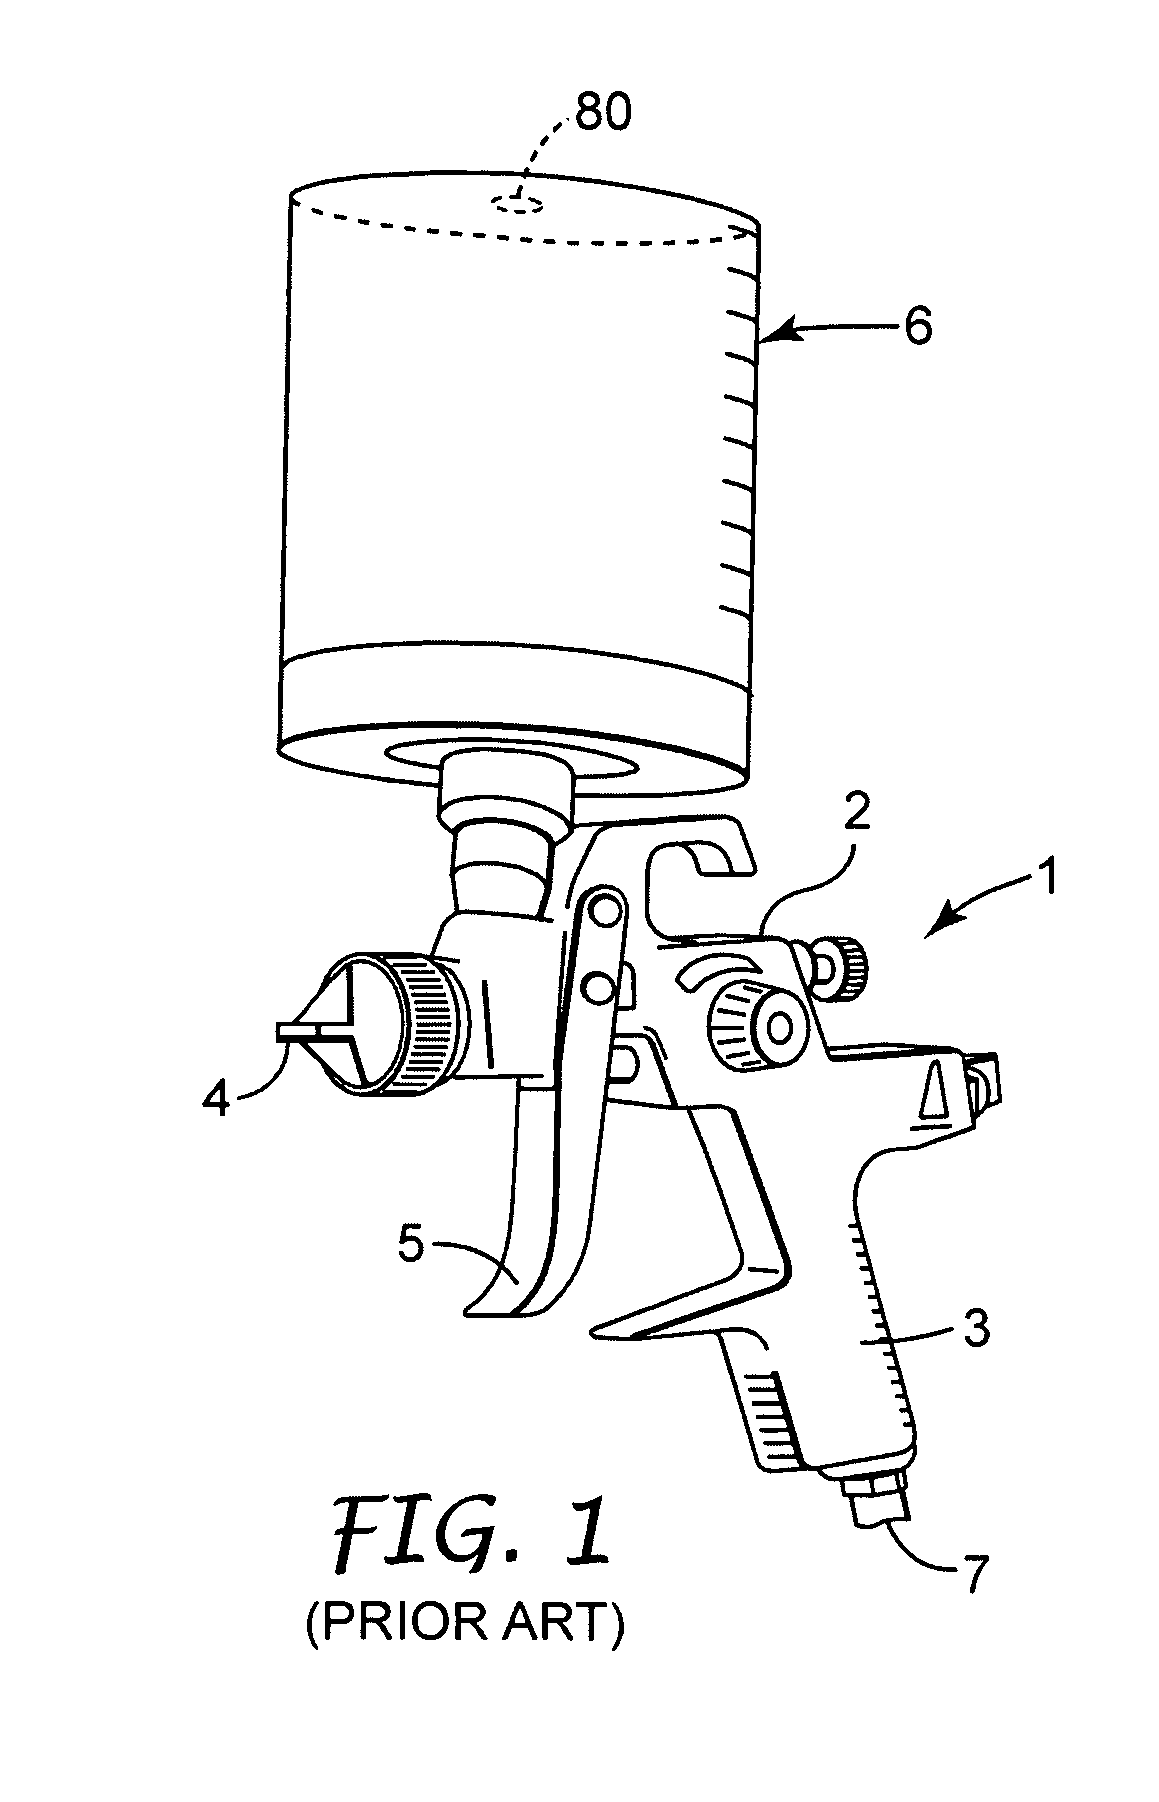 Spray gun reservoir with oversize, fast-fill opening